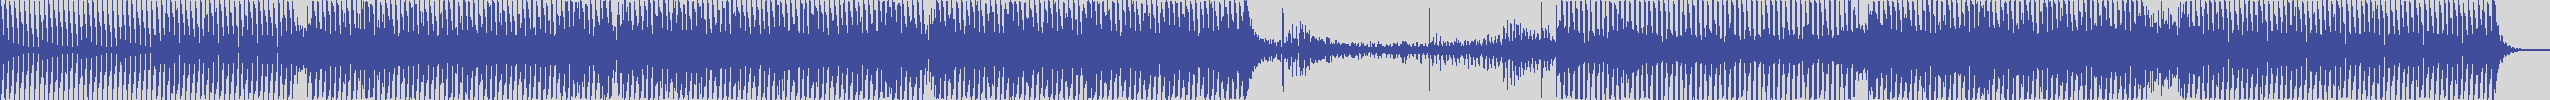 nf_boyz_records [NFY065] Franke Gonzales - Hungry [Original Mix] audio wave form